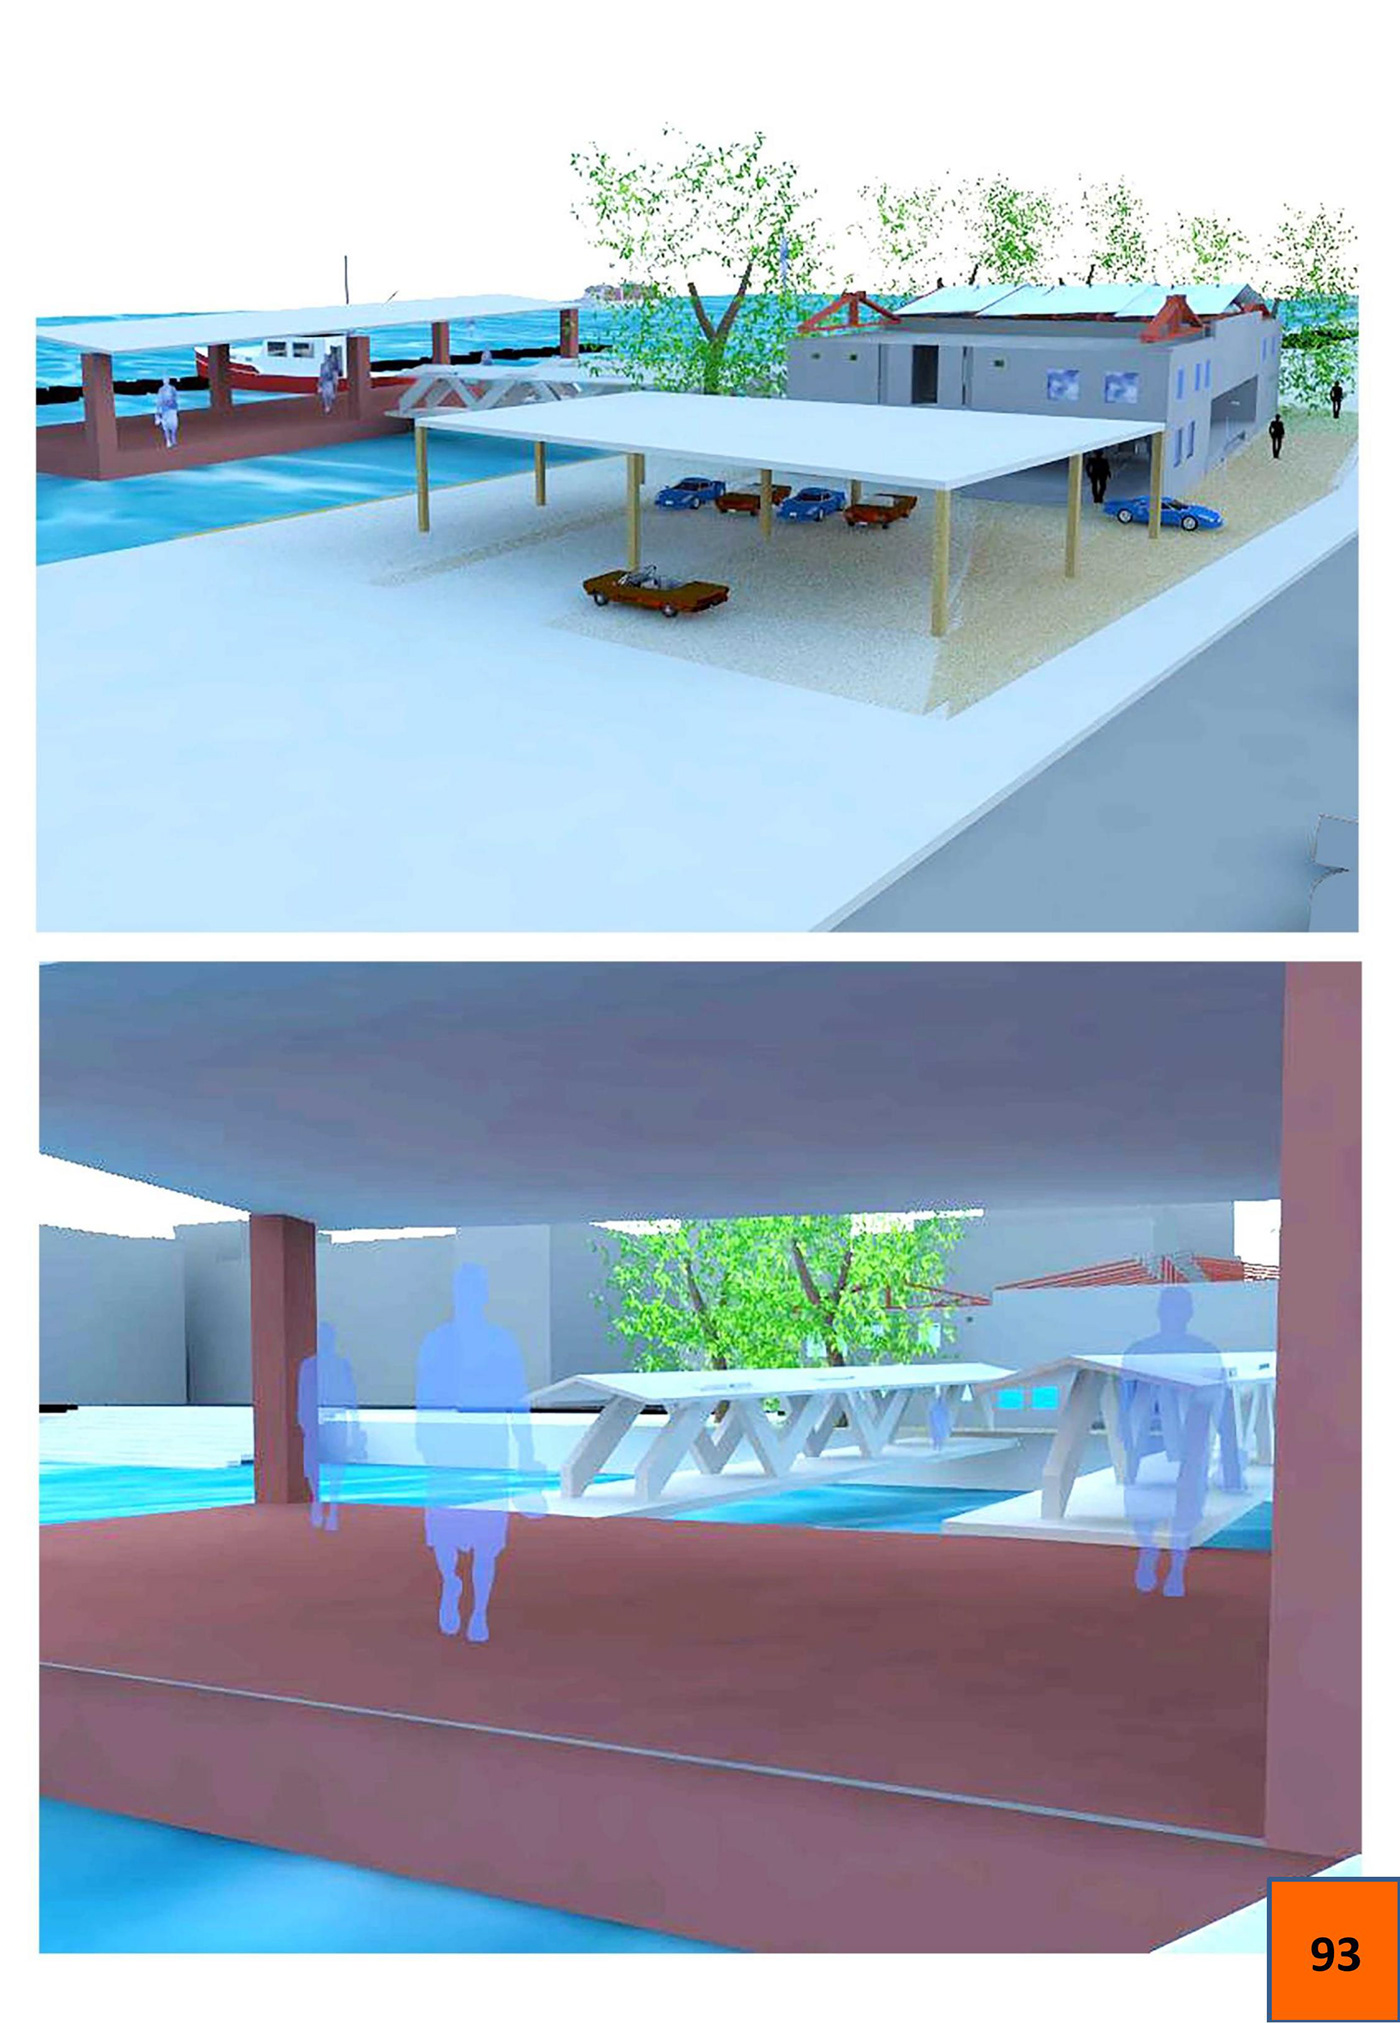 Image may contain: screenshot, indoor and swimming pool